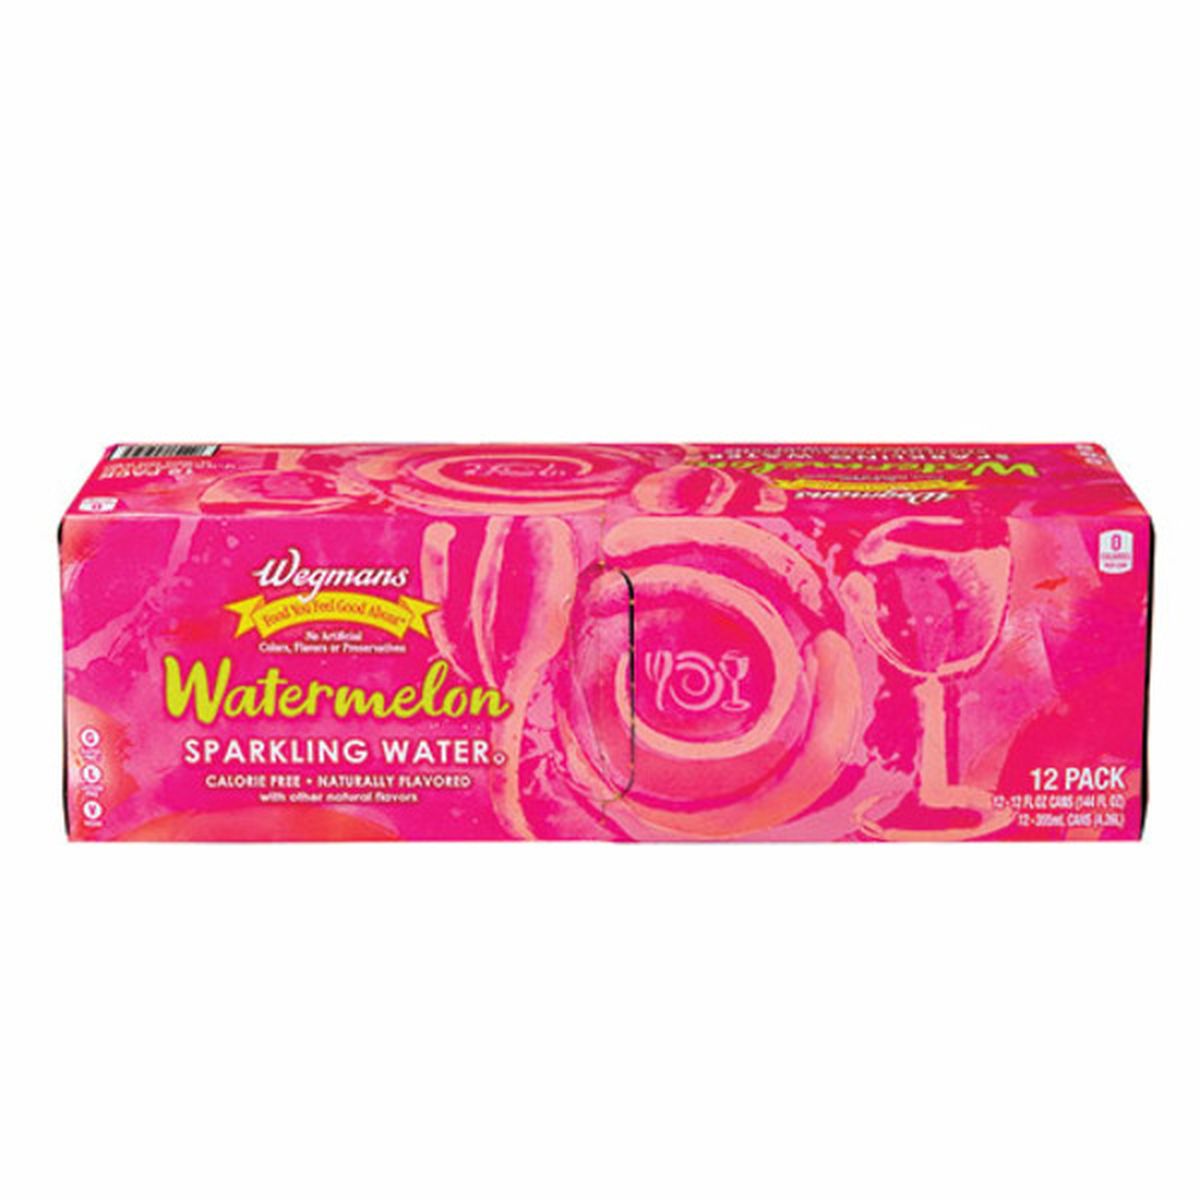 Calories in Wegmans Sparkling Water Watermelon, 12 Pack